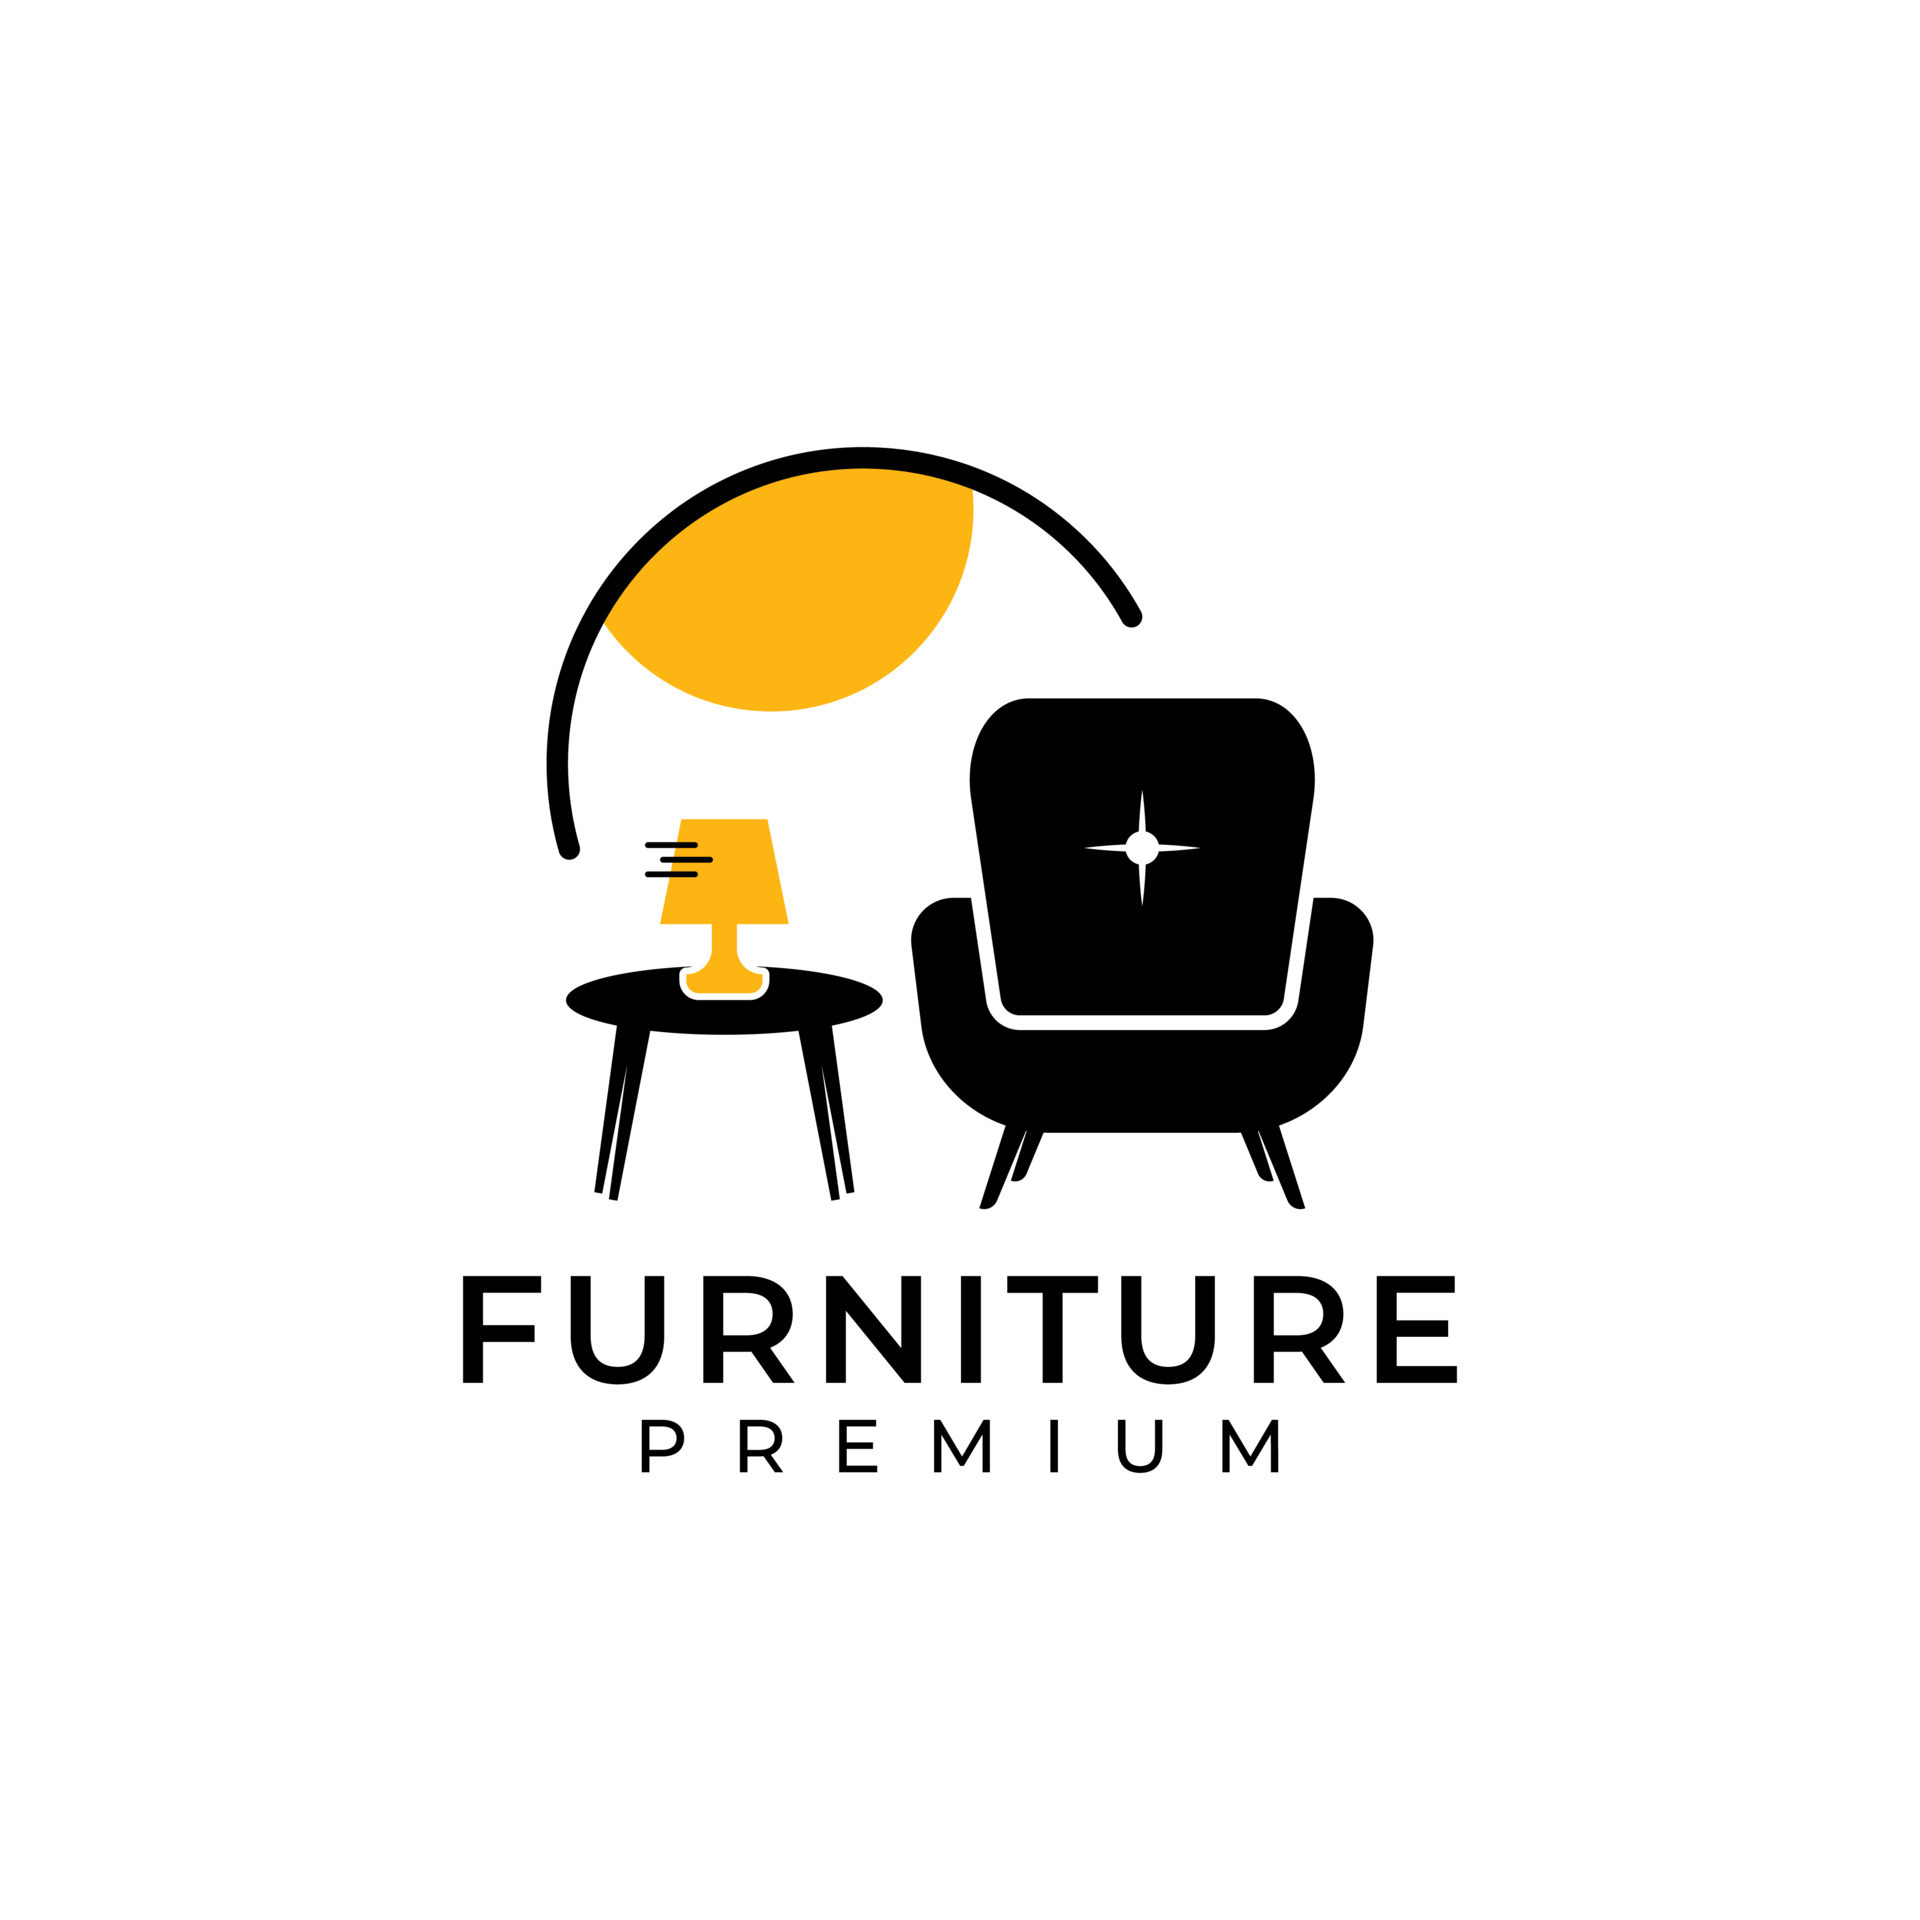 furniture logo ideas 2